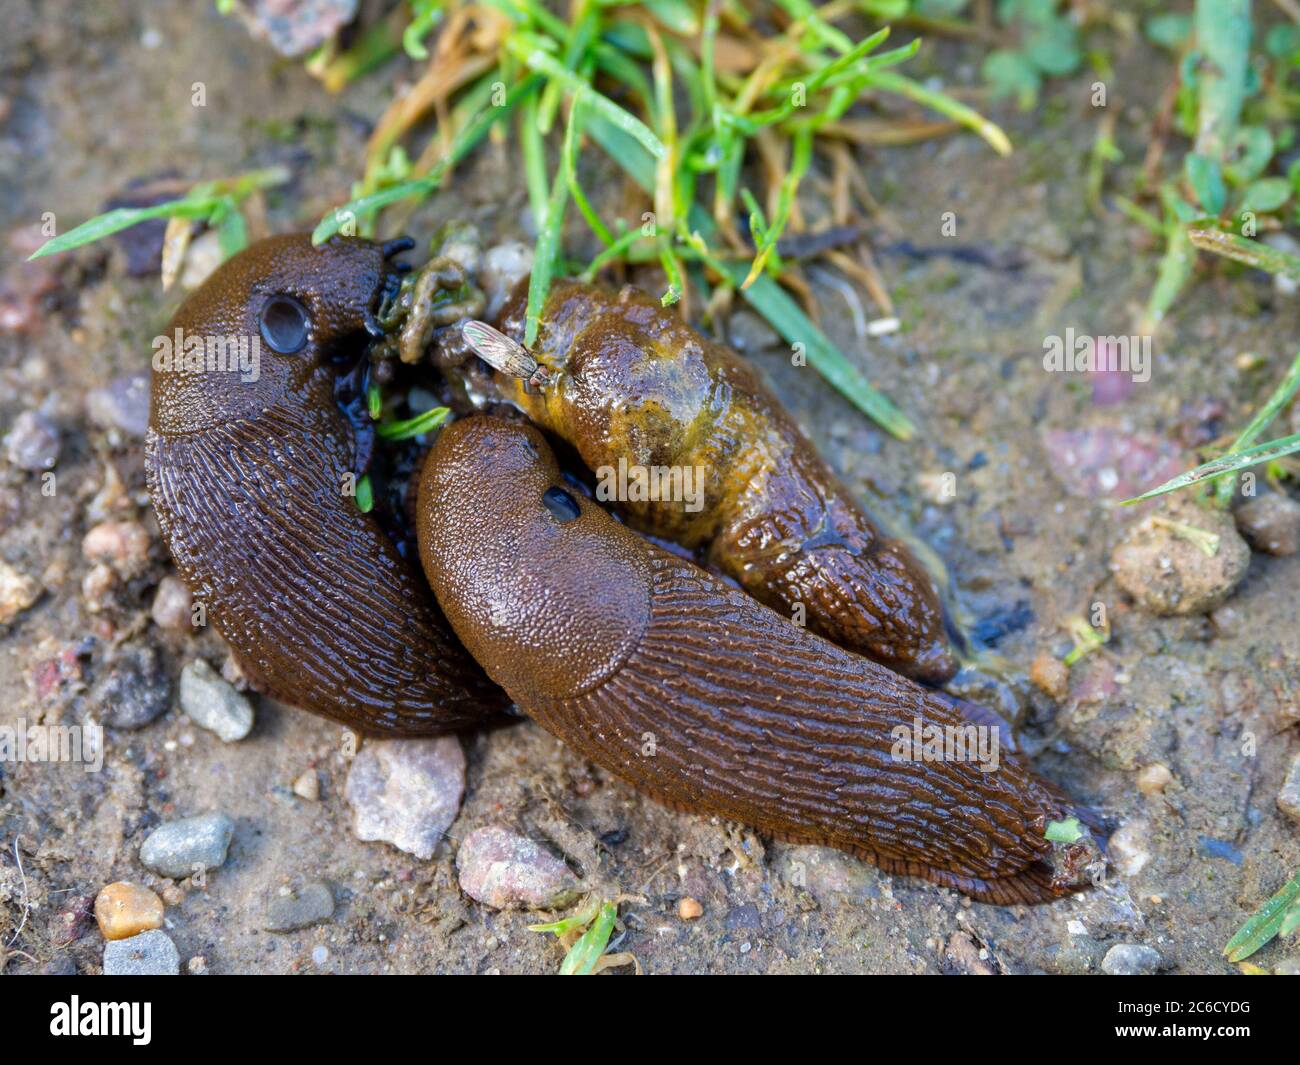 brown slugs mating on a sidewalk Stock Photo